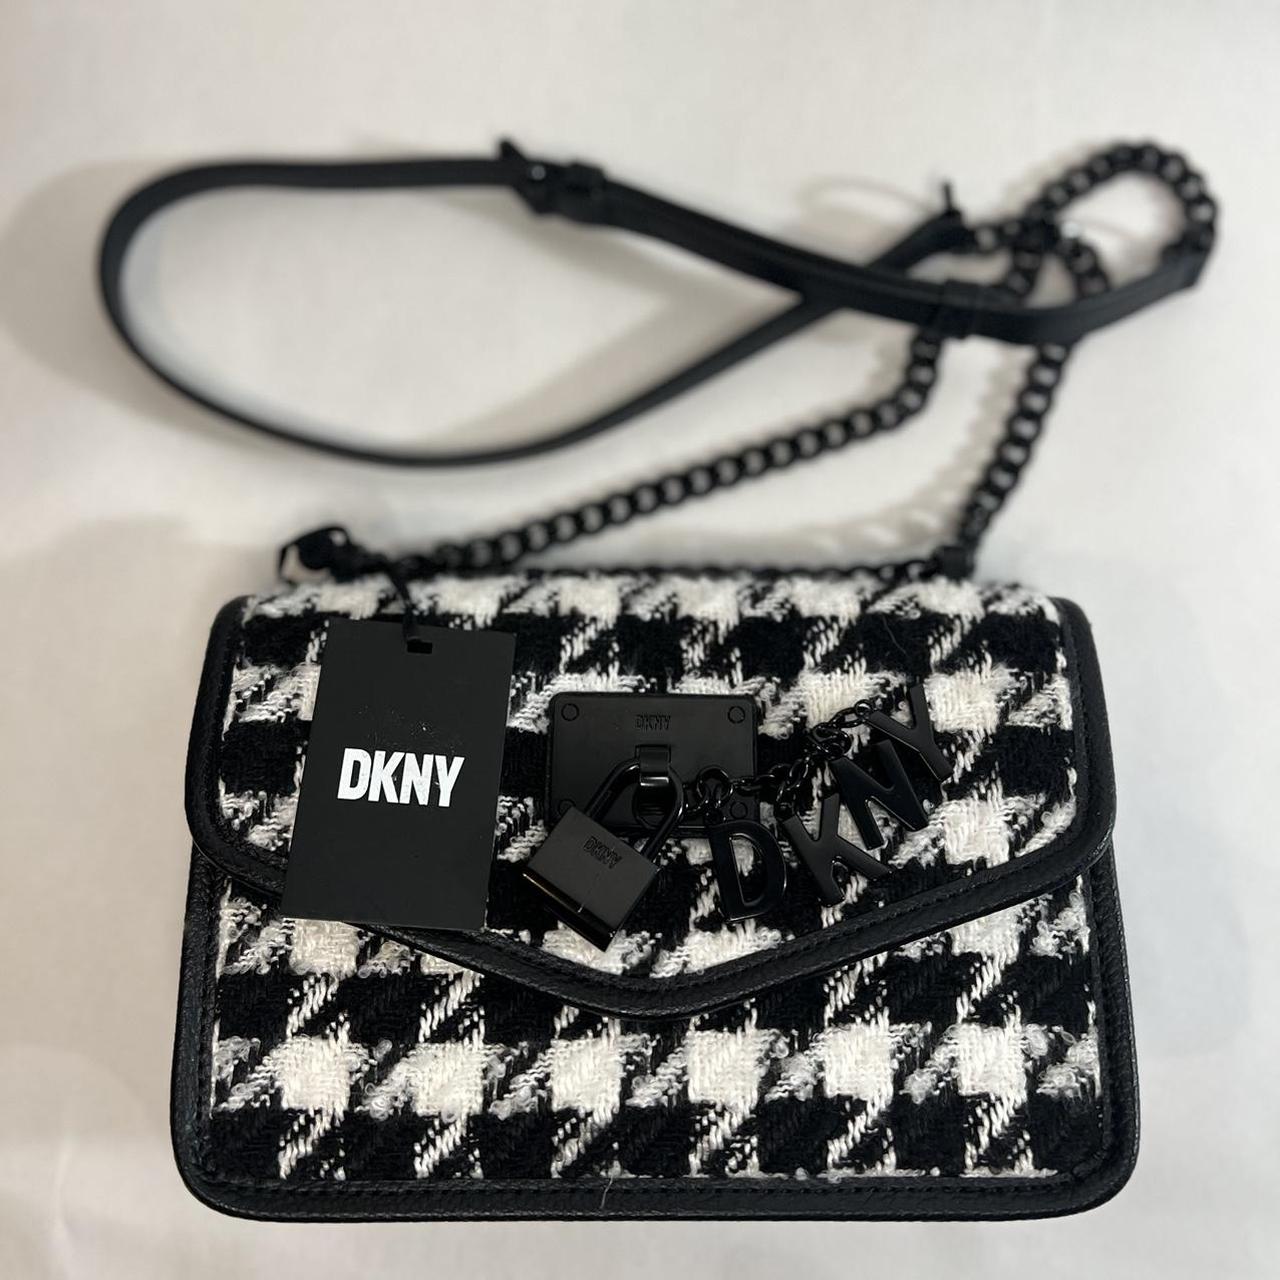 DKNY Women's Black and White Bag